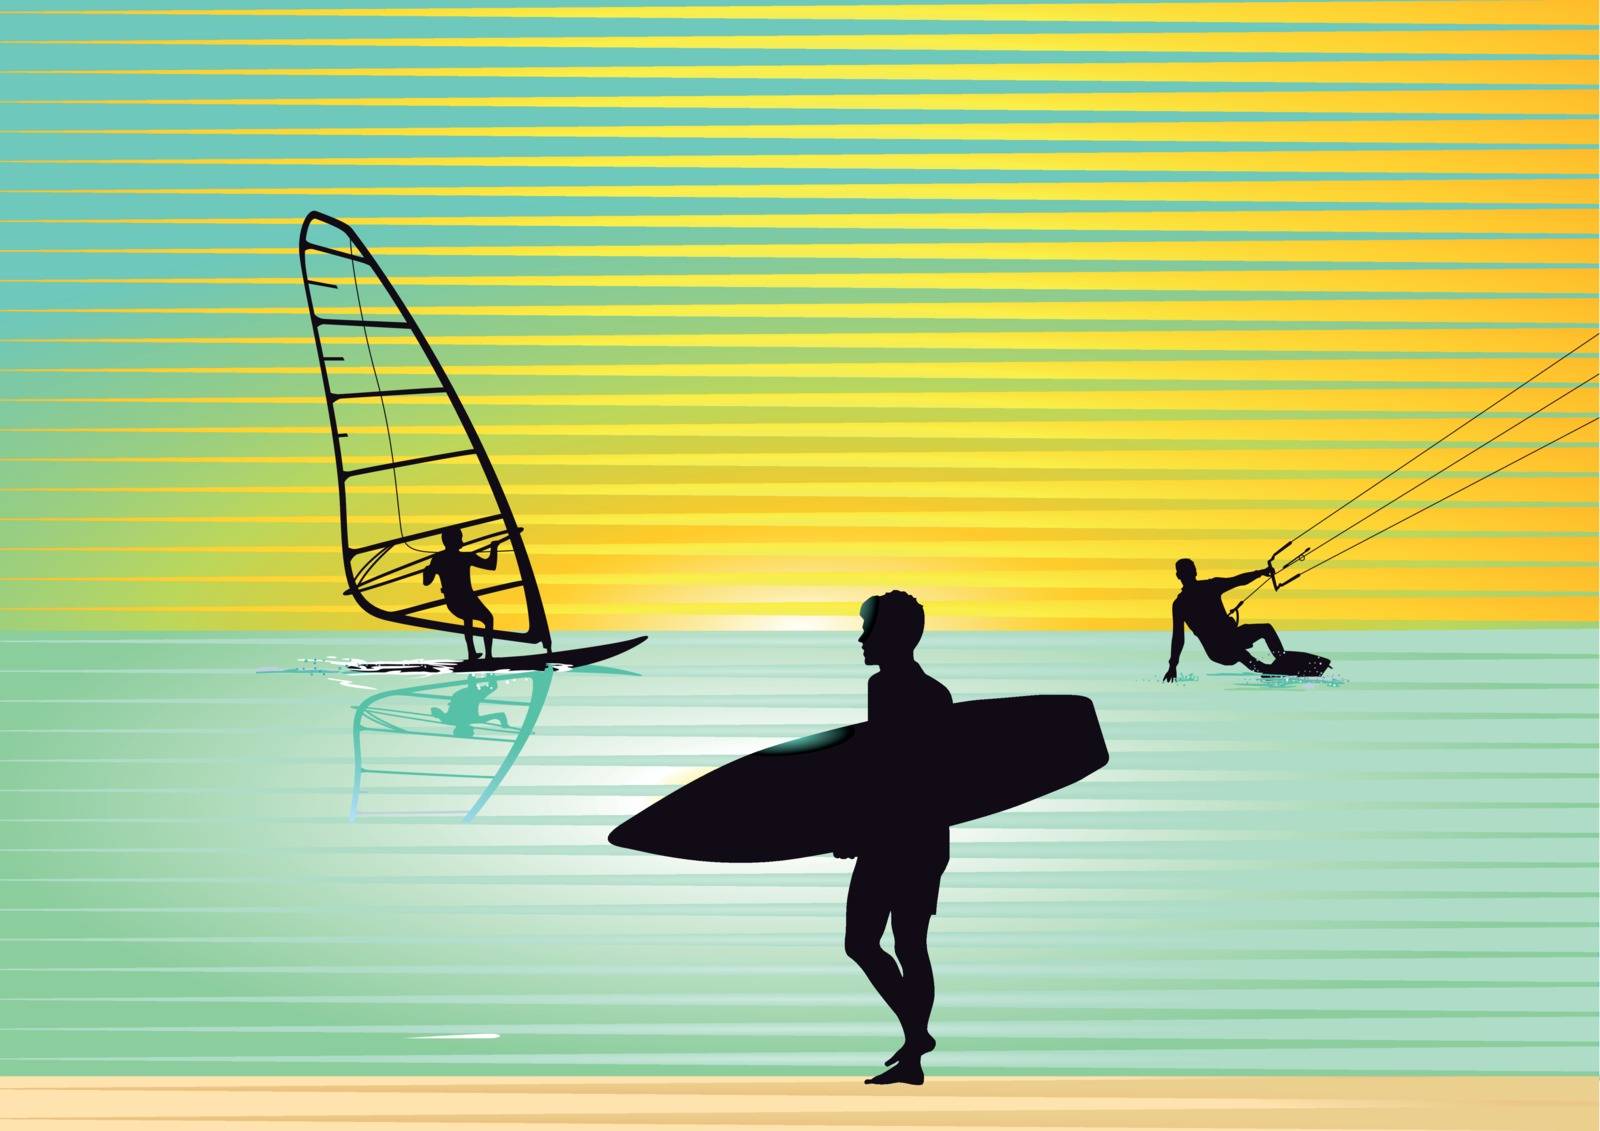 Surf Illustration